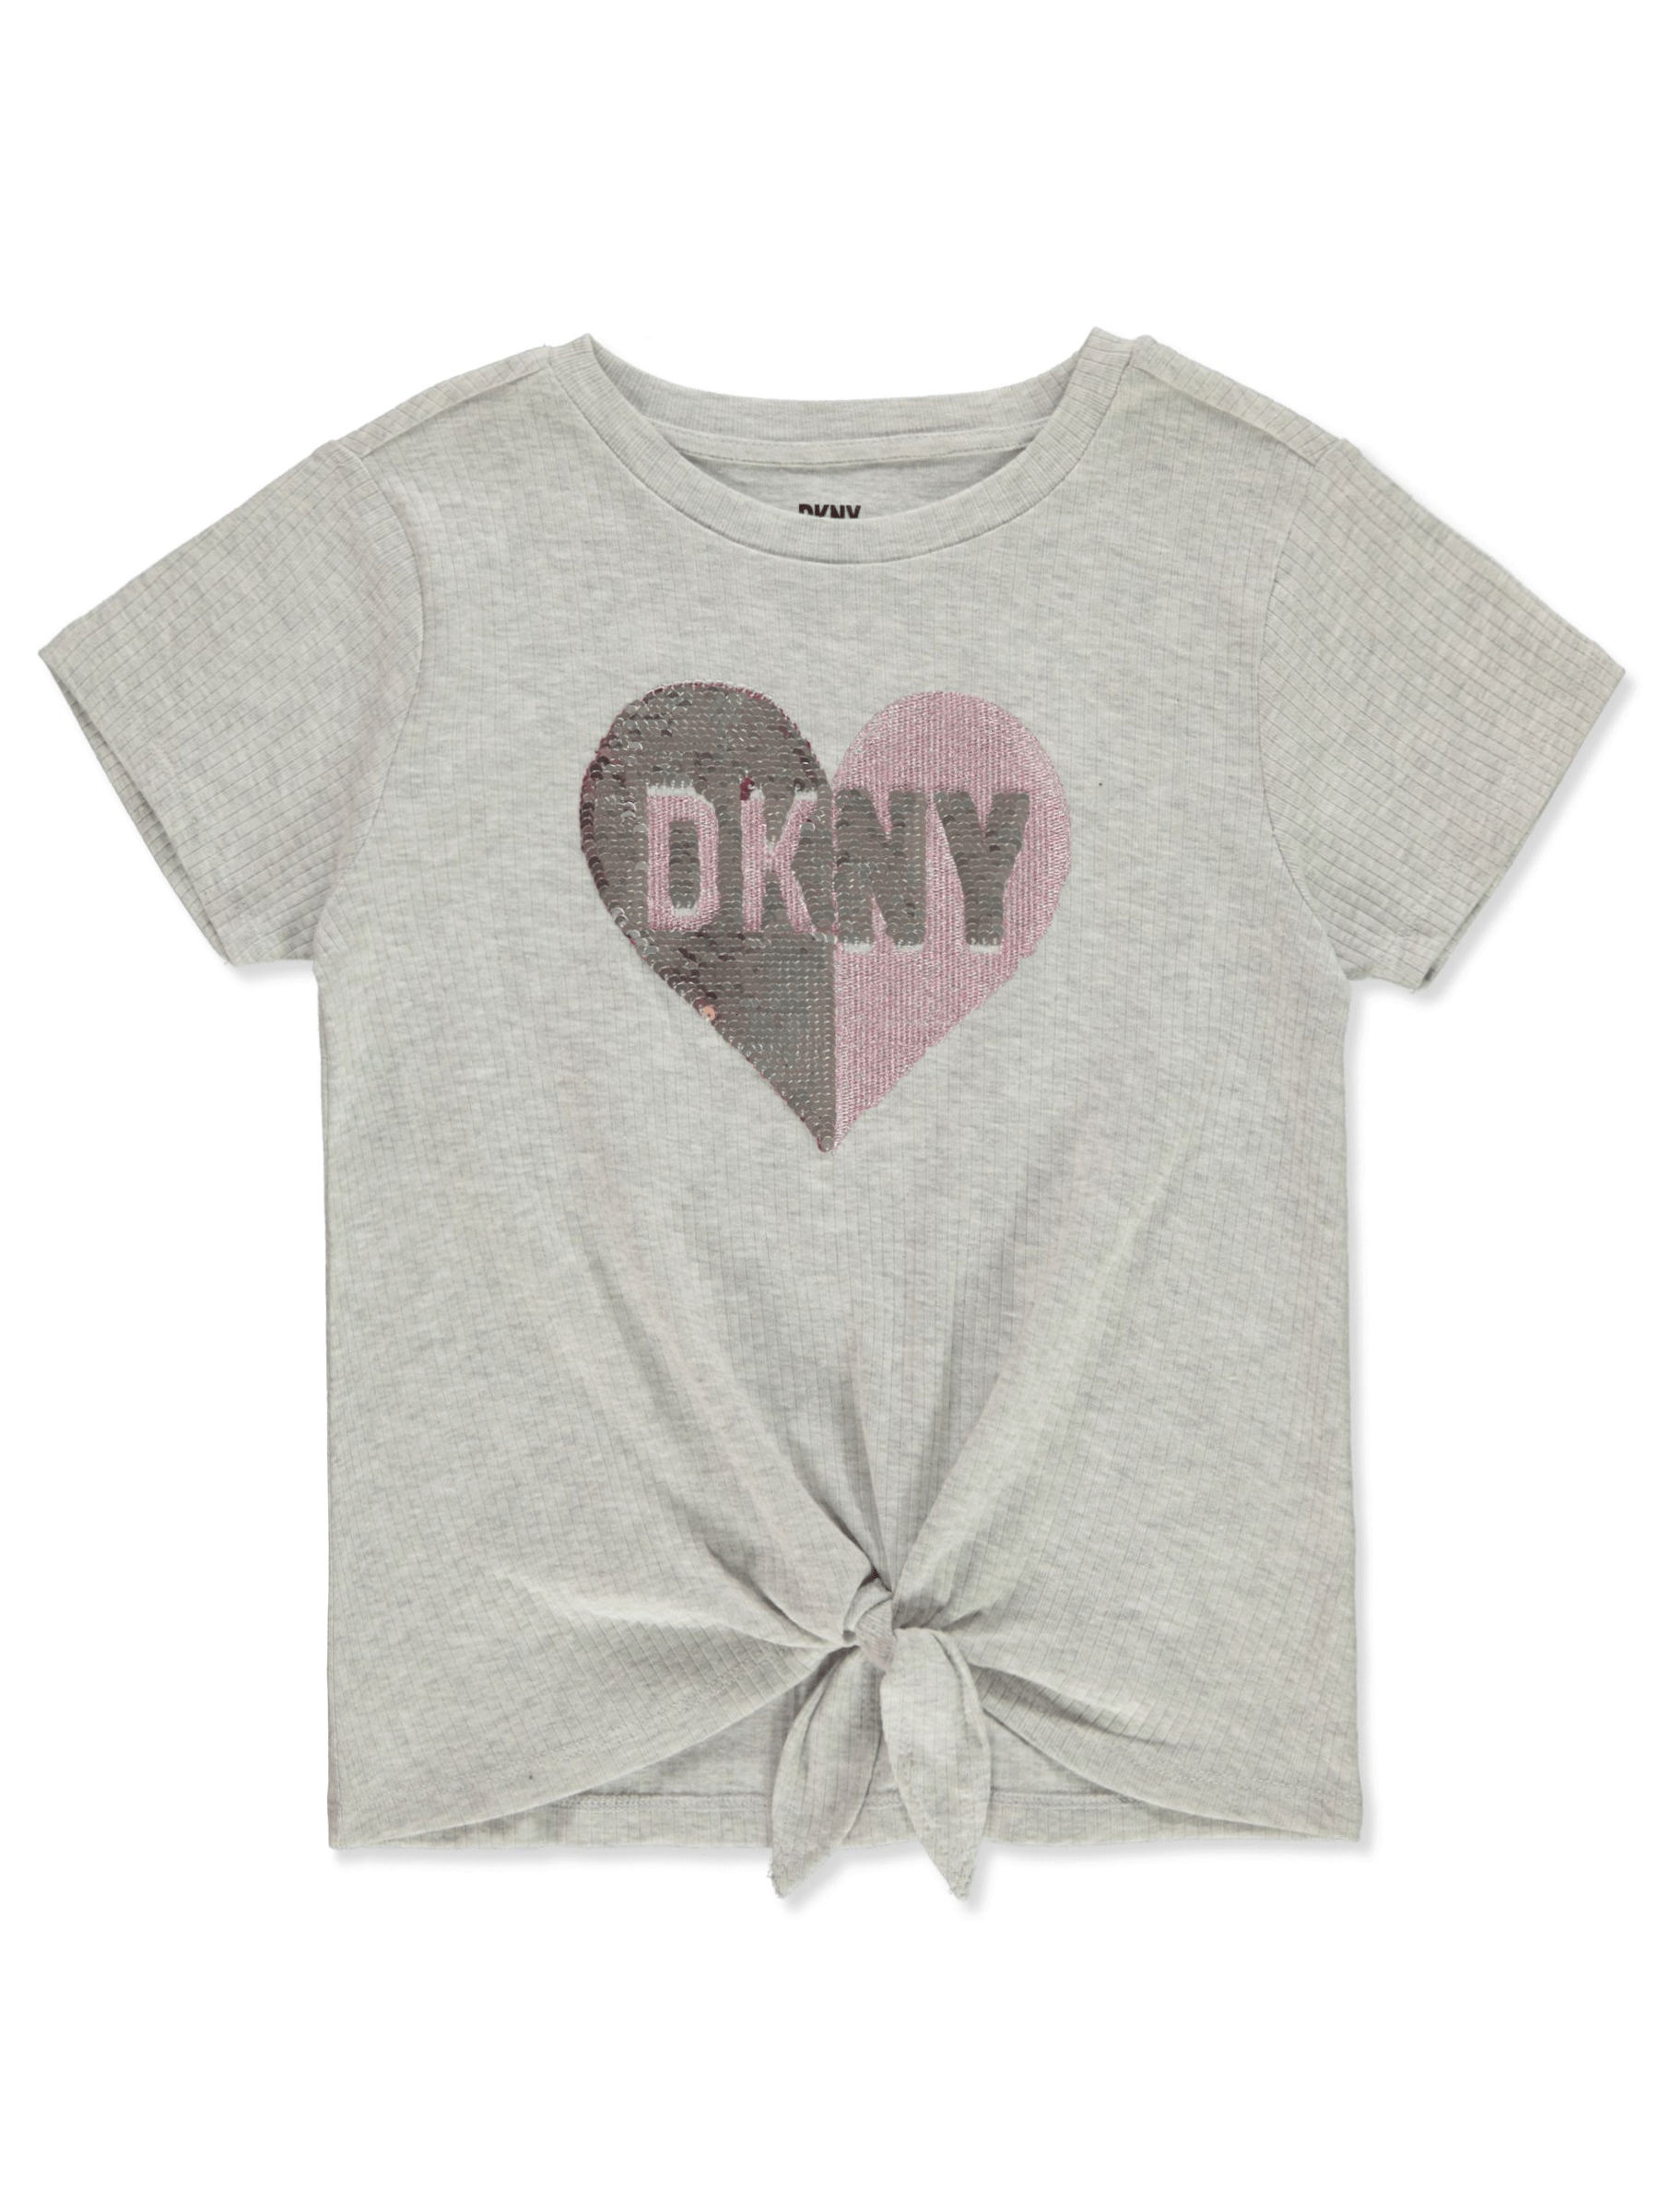 DKNY - Teen Girls White Cotton T-Shirt